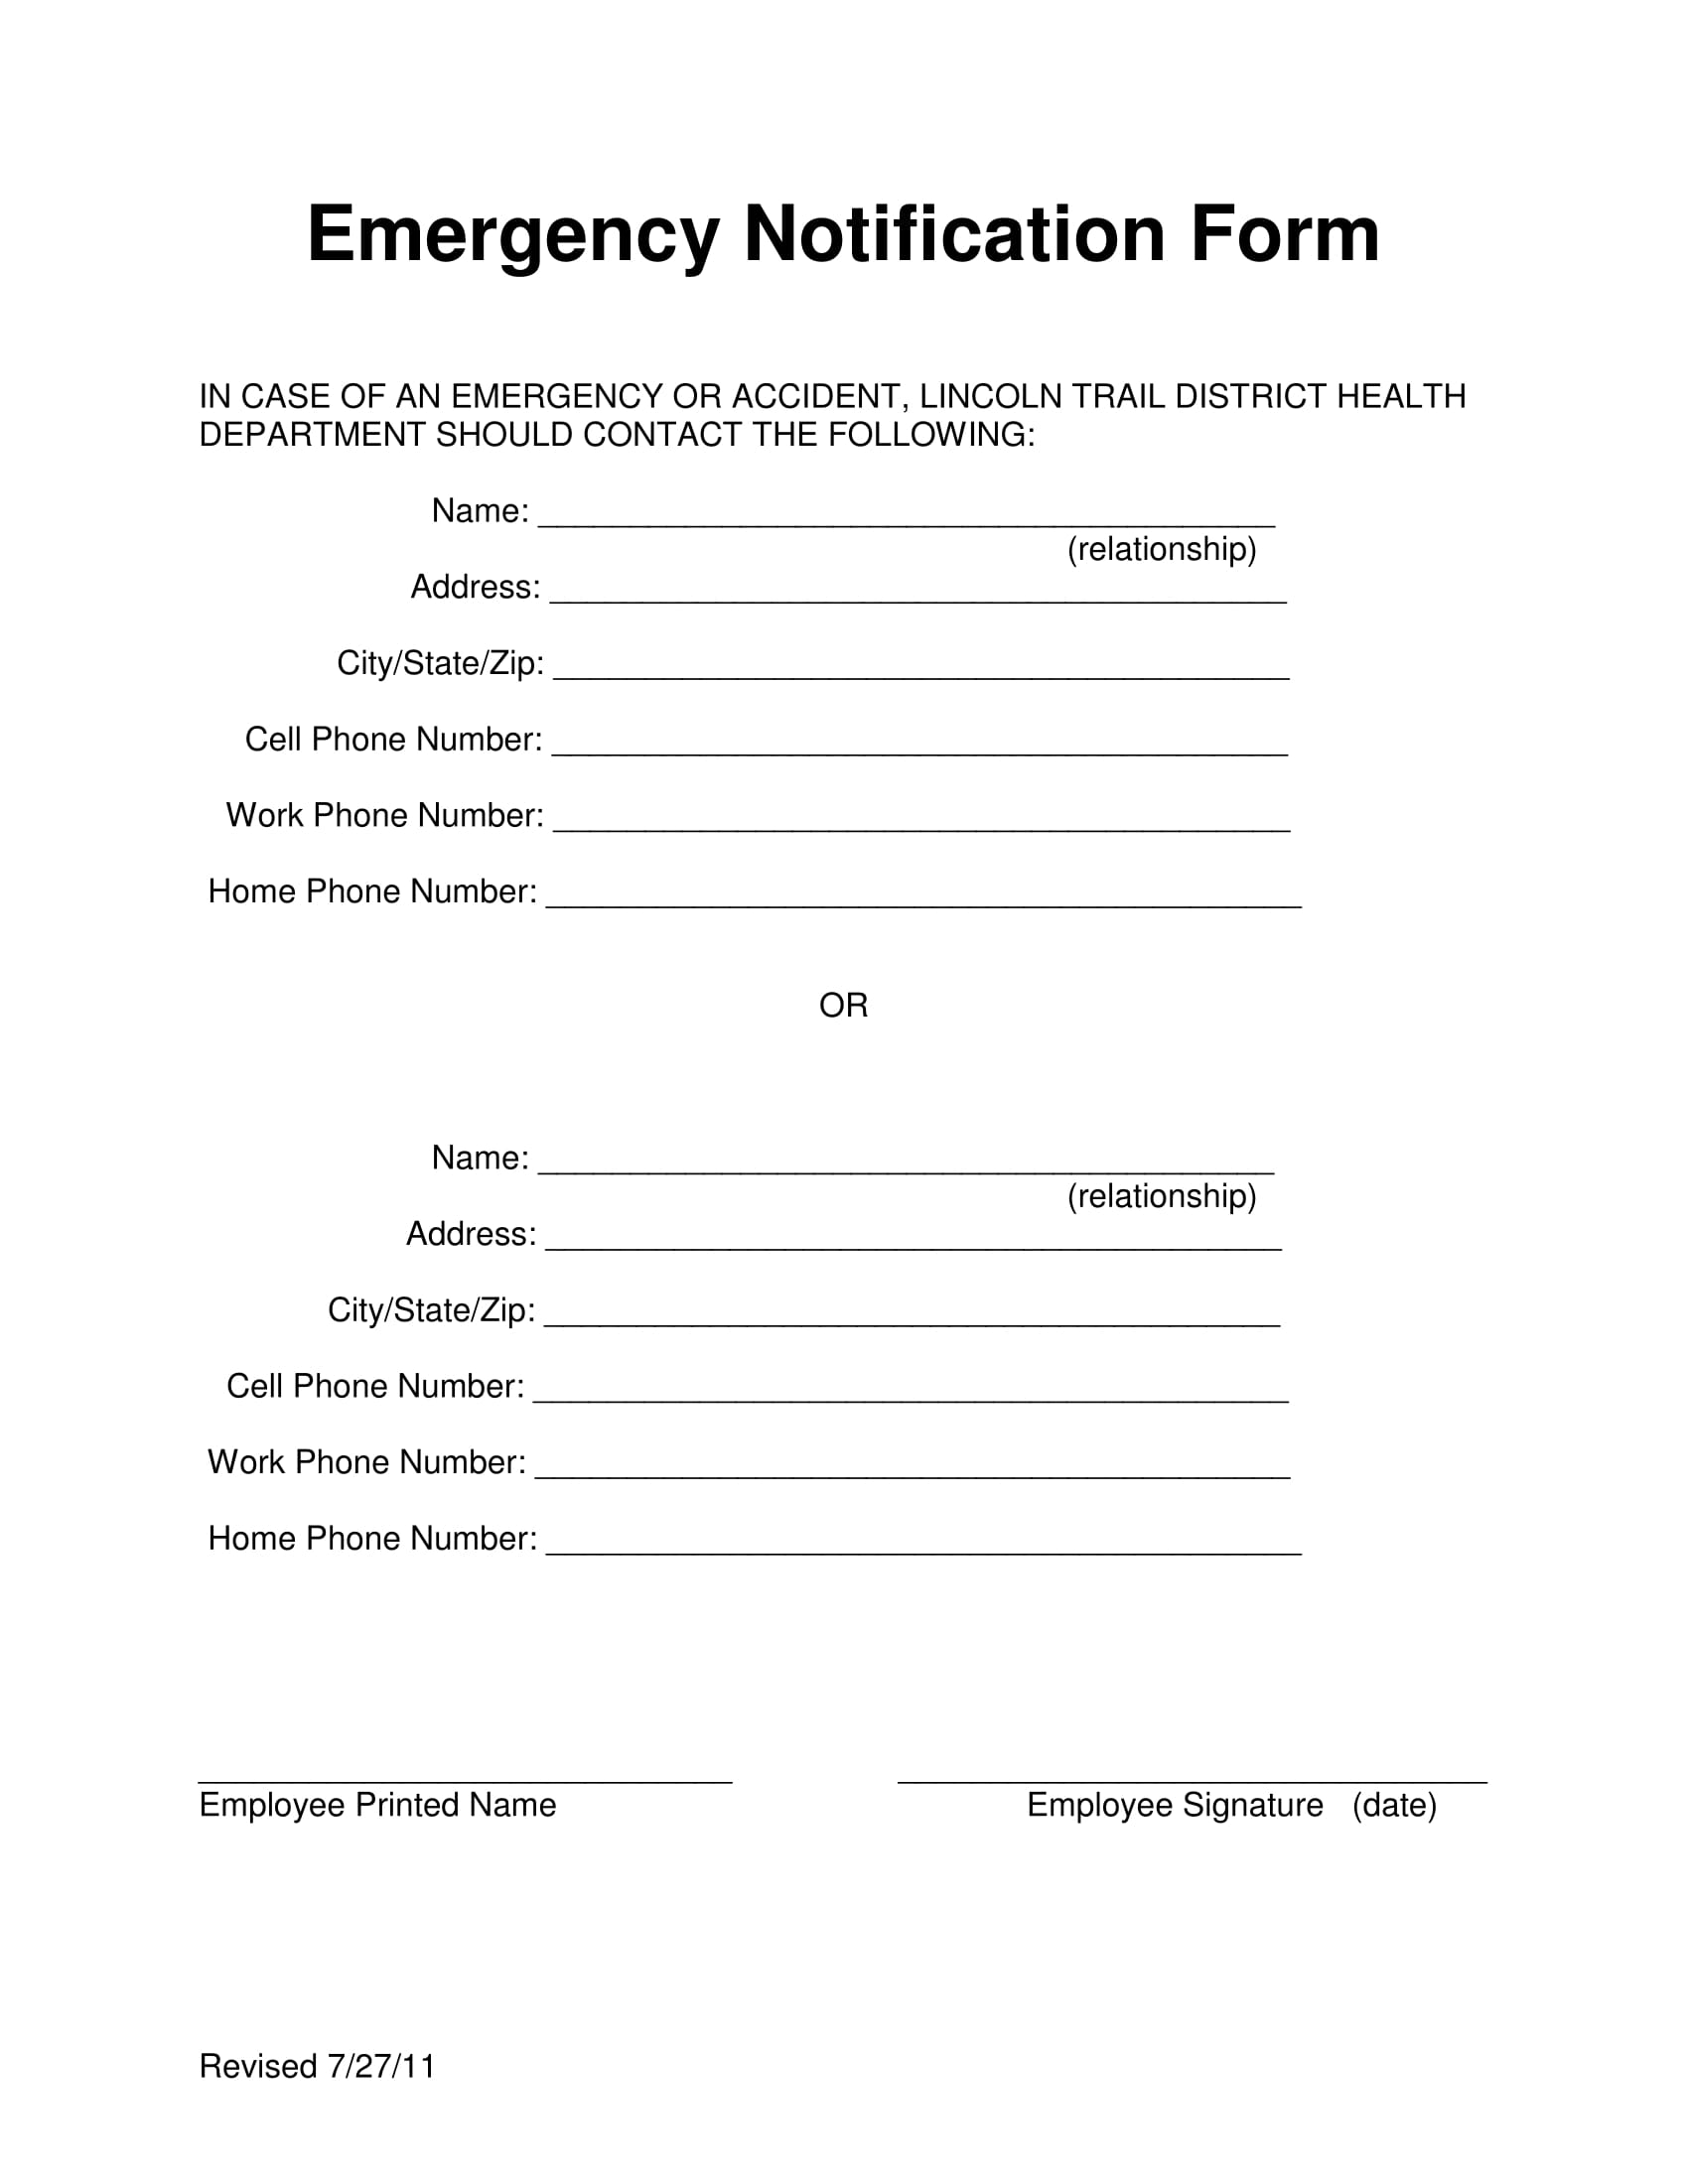 health department employee emergency notification form 1